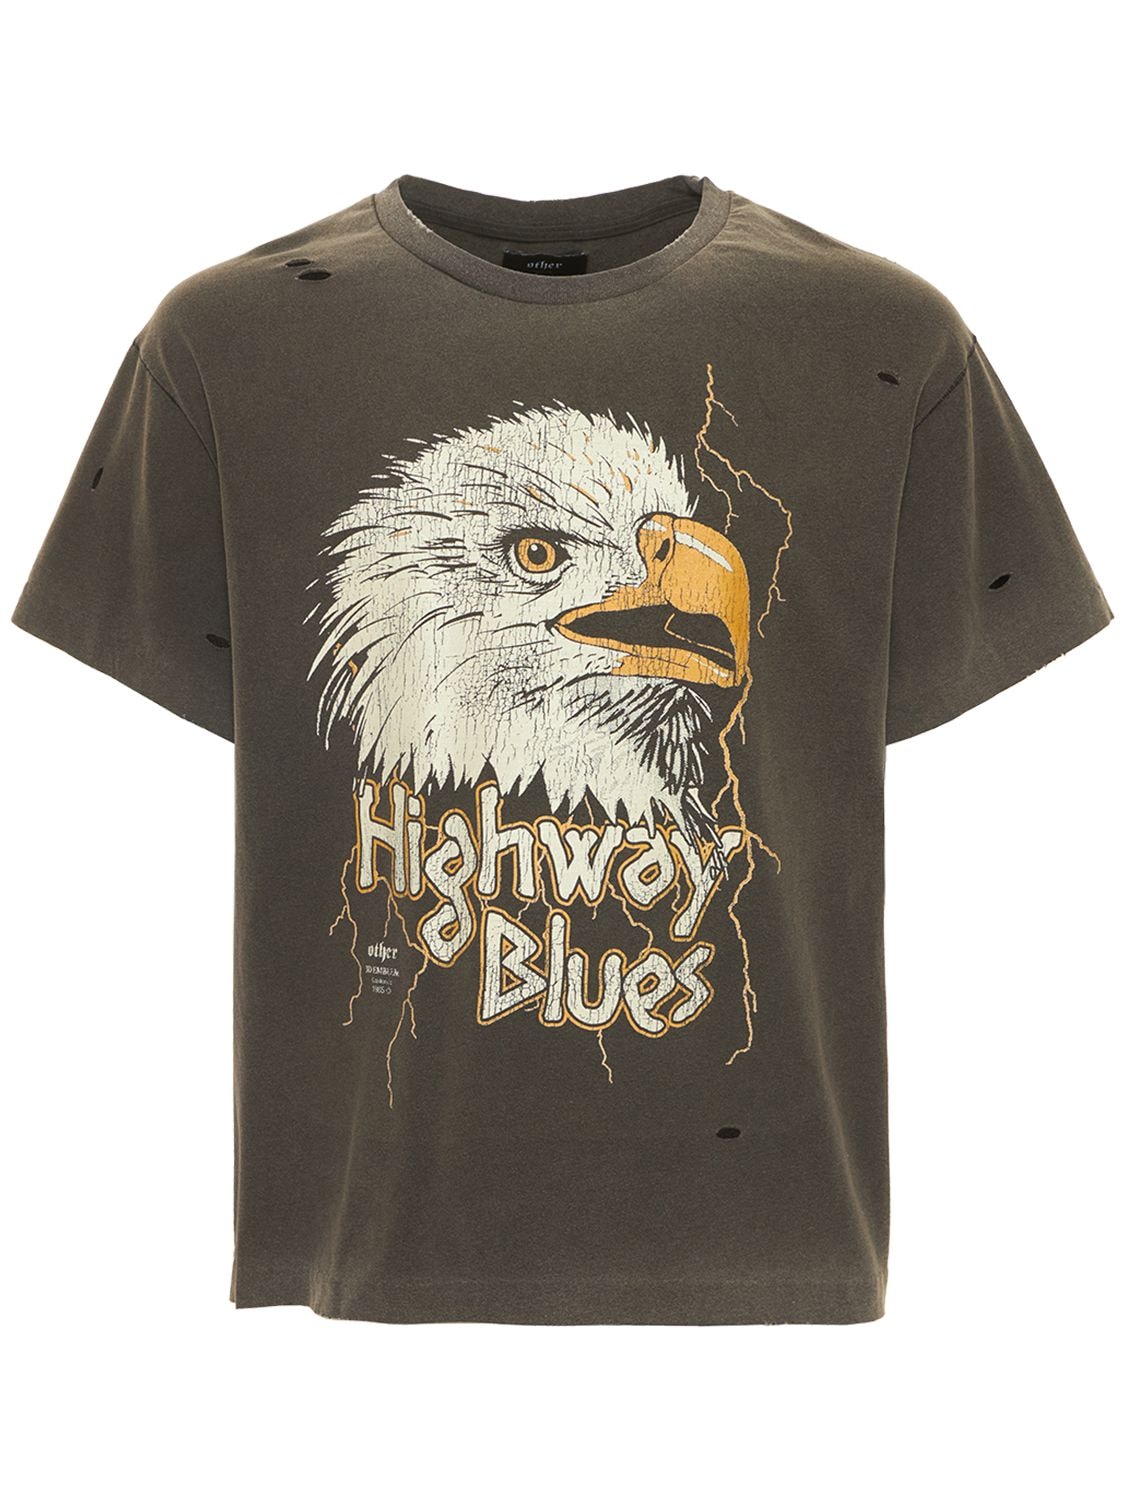 Other Eagle Vintage Cotton T-shirt In Black